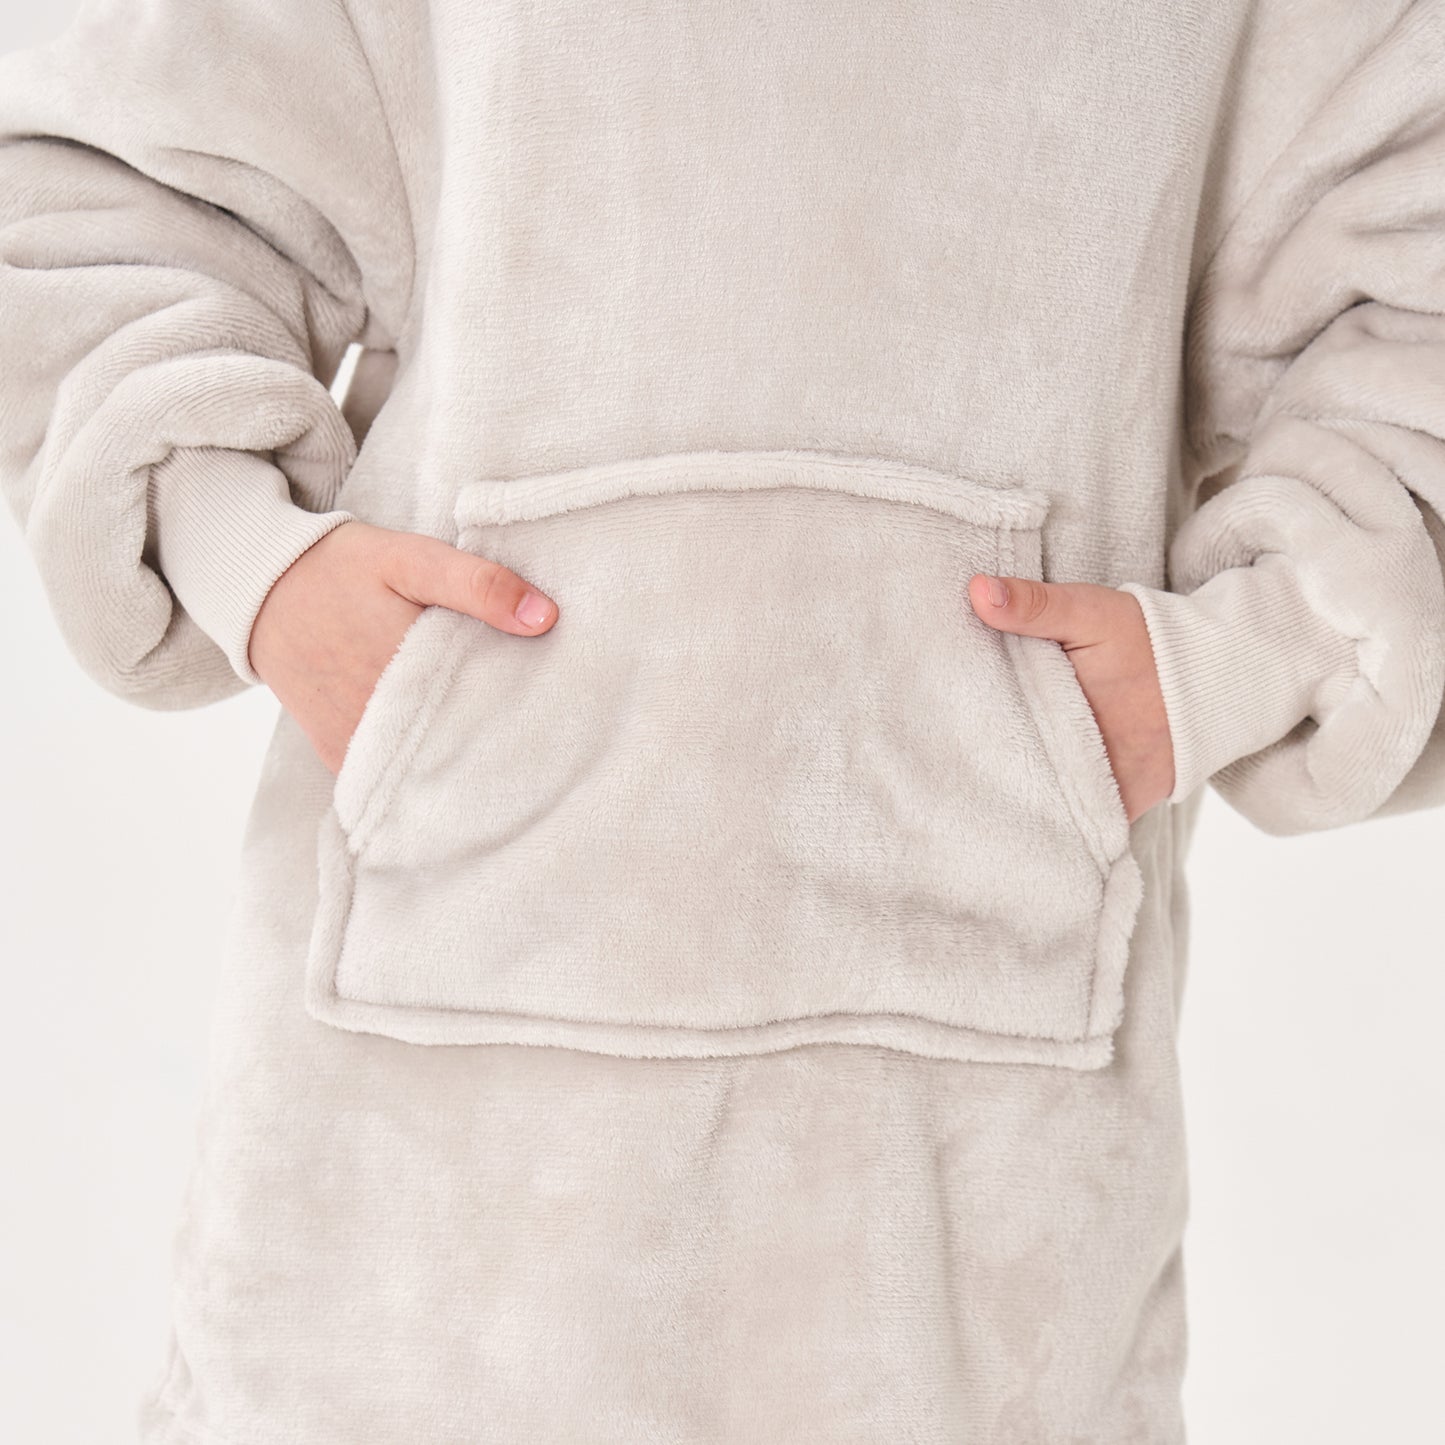 Snuggle hoodie | Pumice stone